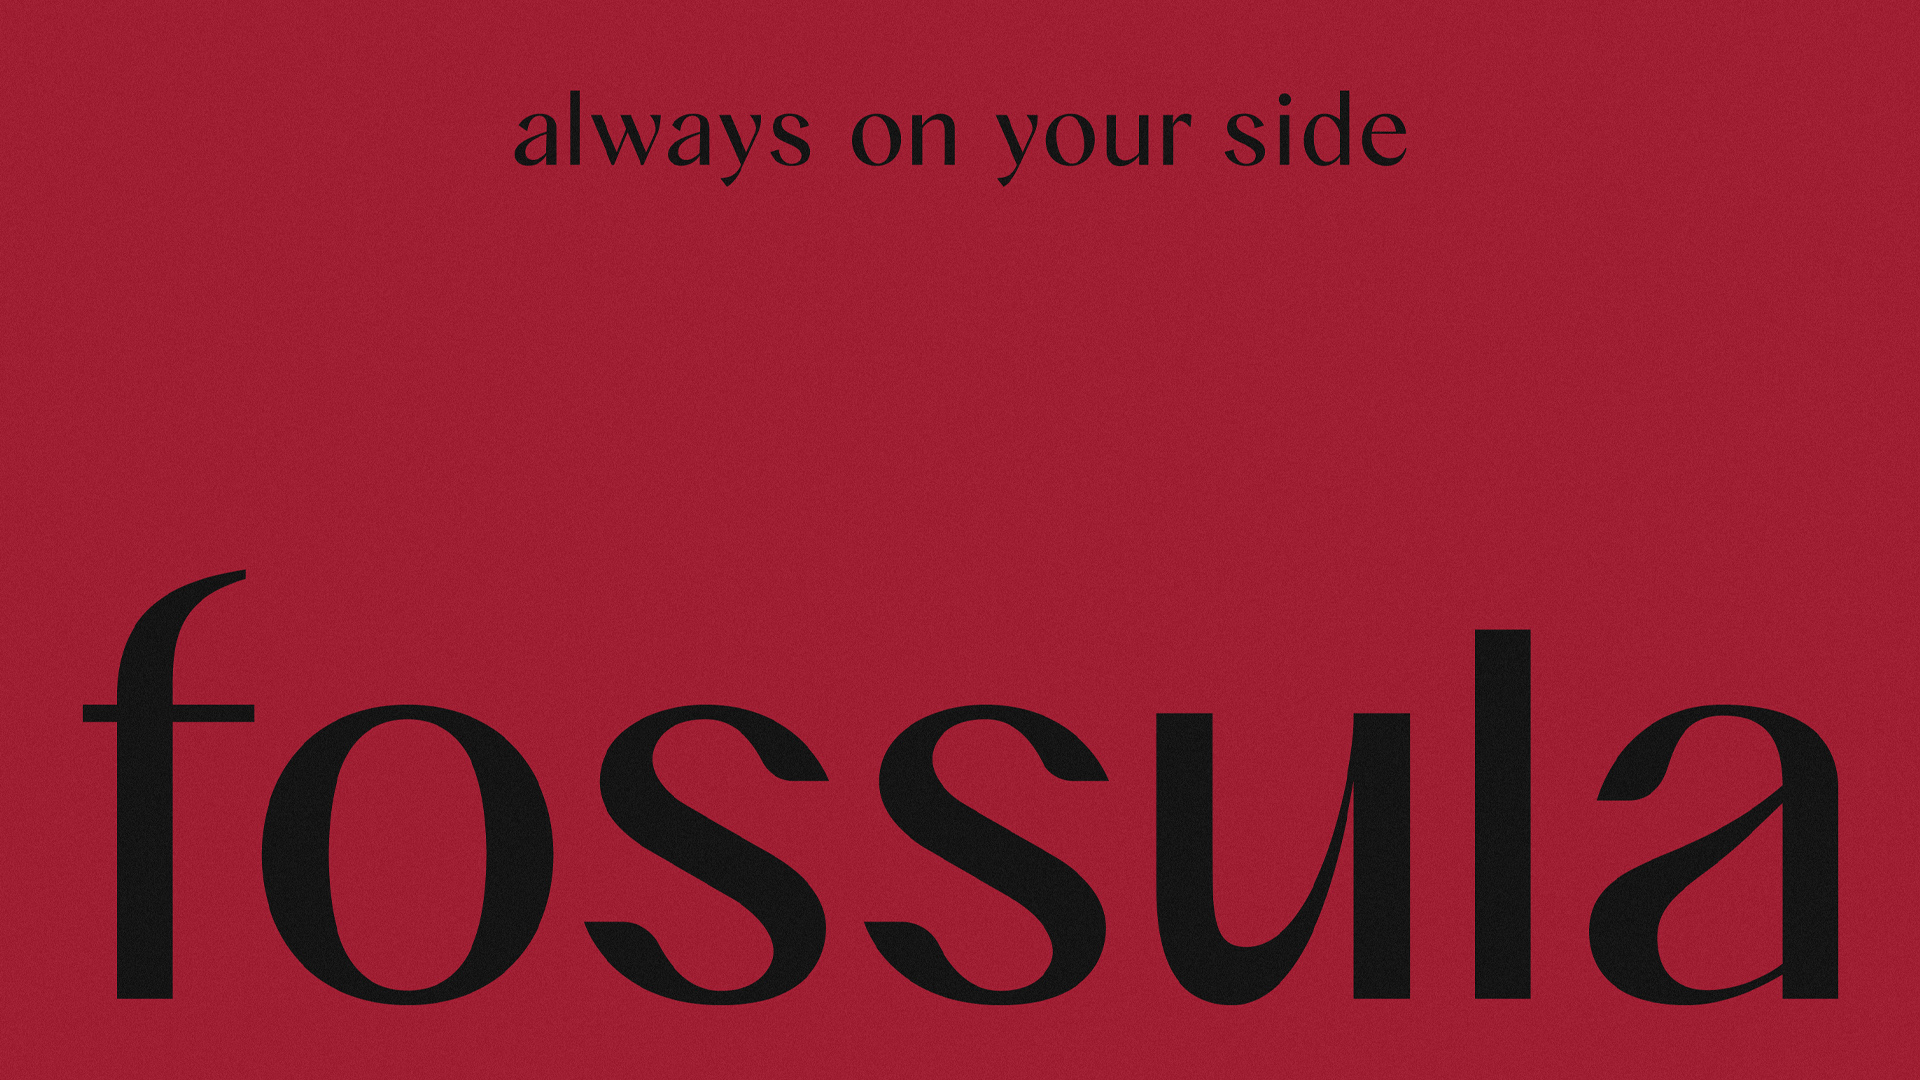 fossula_side